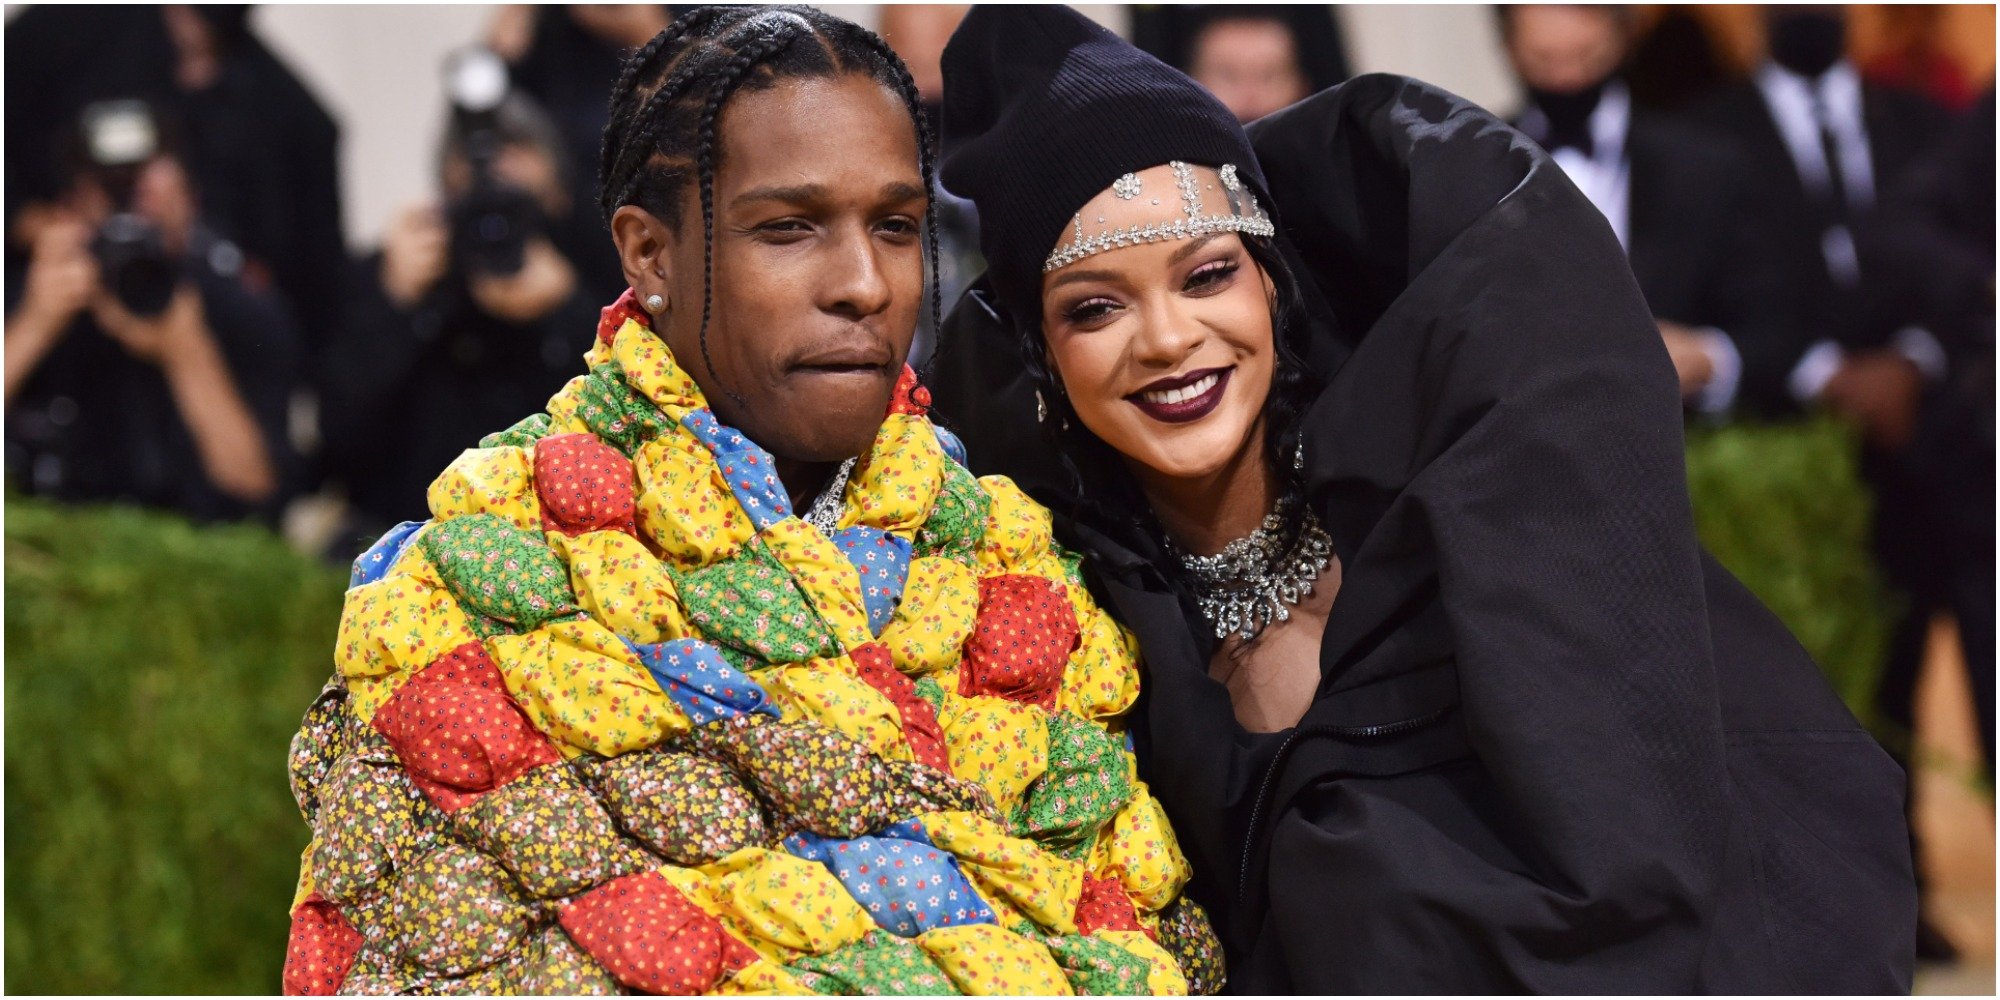 Rihanna Reveals Surprise Pregnancy on Snowy Walk With A$AP Rocky